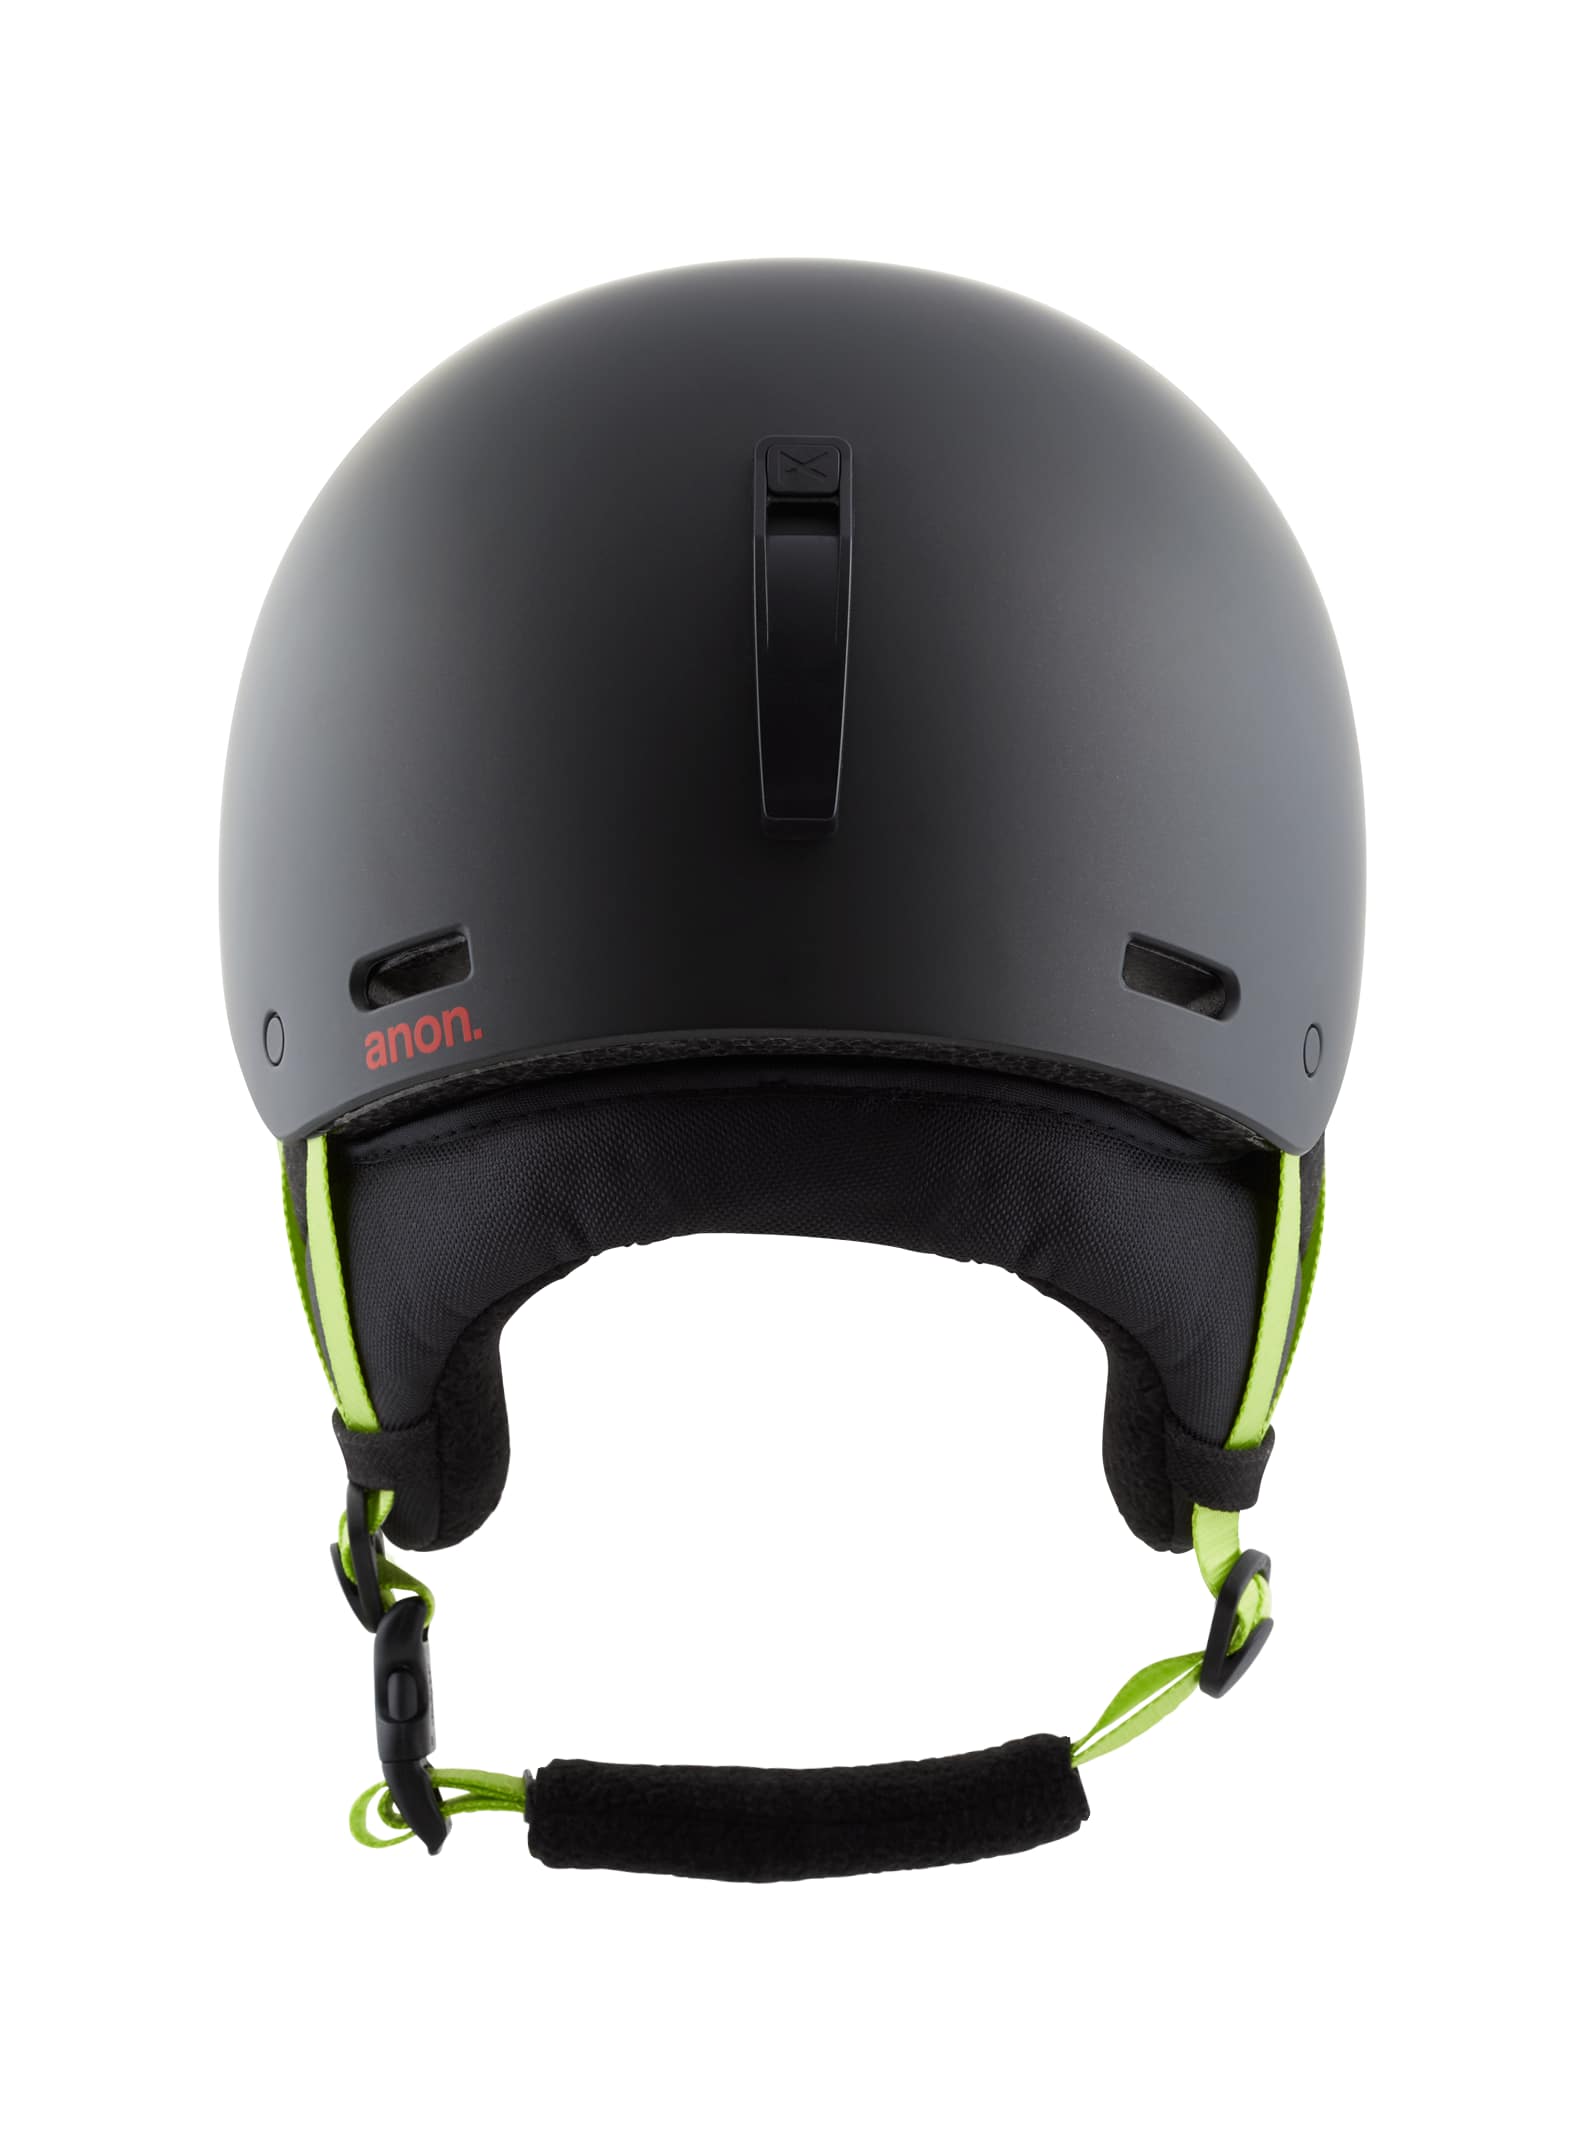 Men's Anon Raider 3 Helmet | Burton.com Winter 2021 US